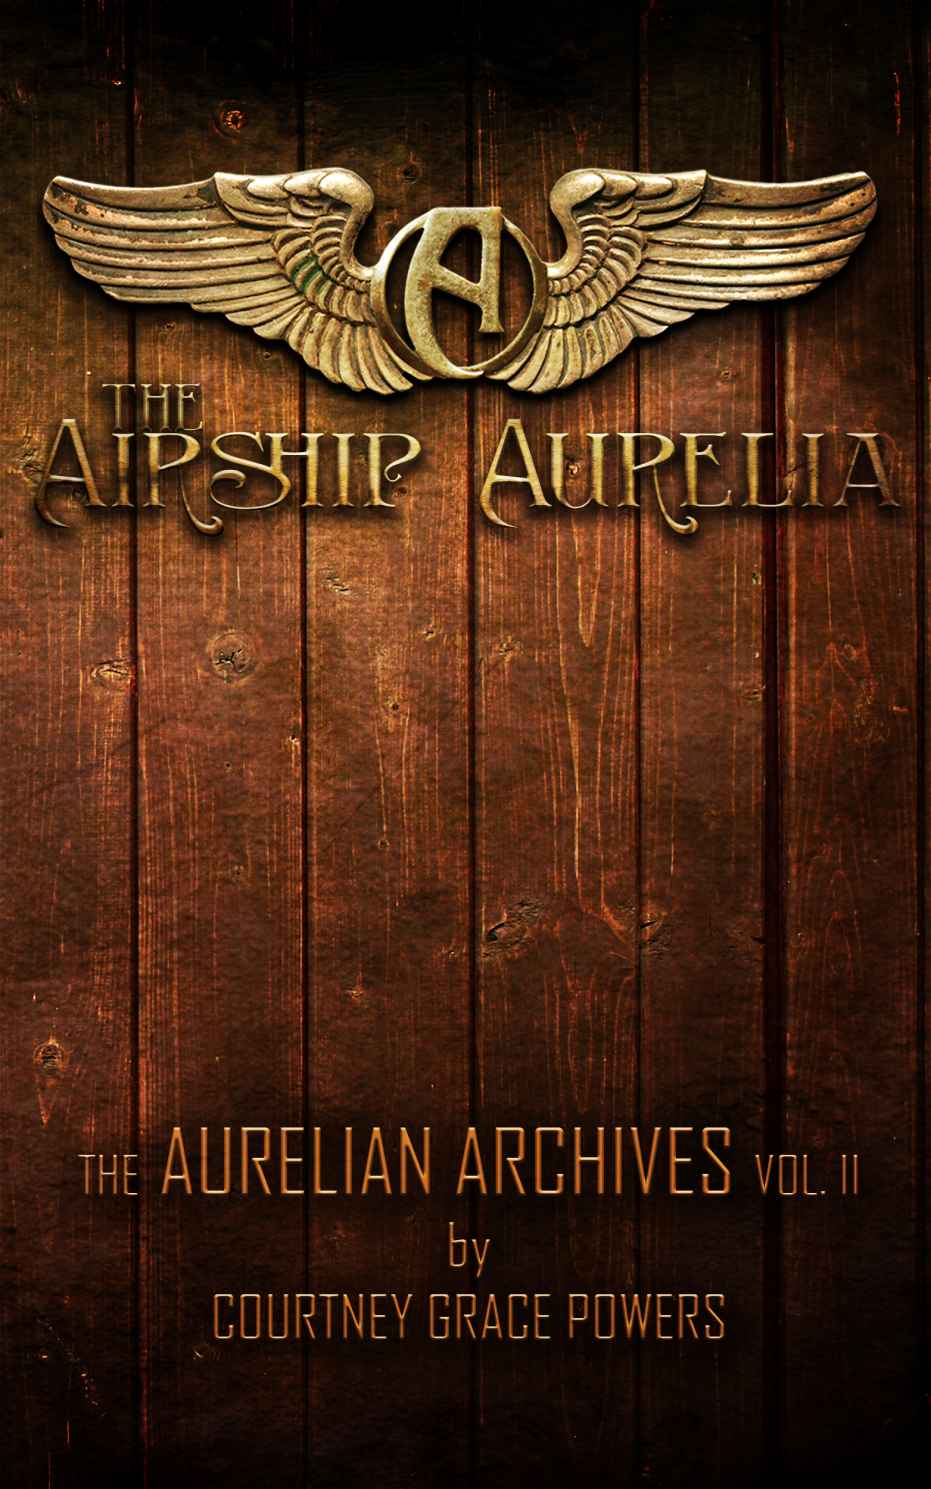 The Airship Aurelia (The Aurelian Archives) by Powers, Courtney Grace